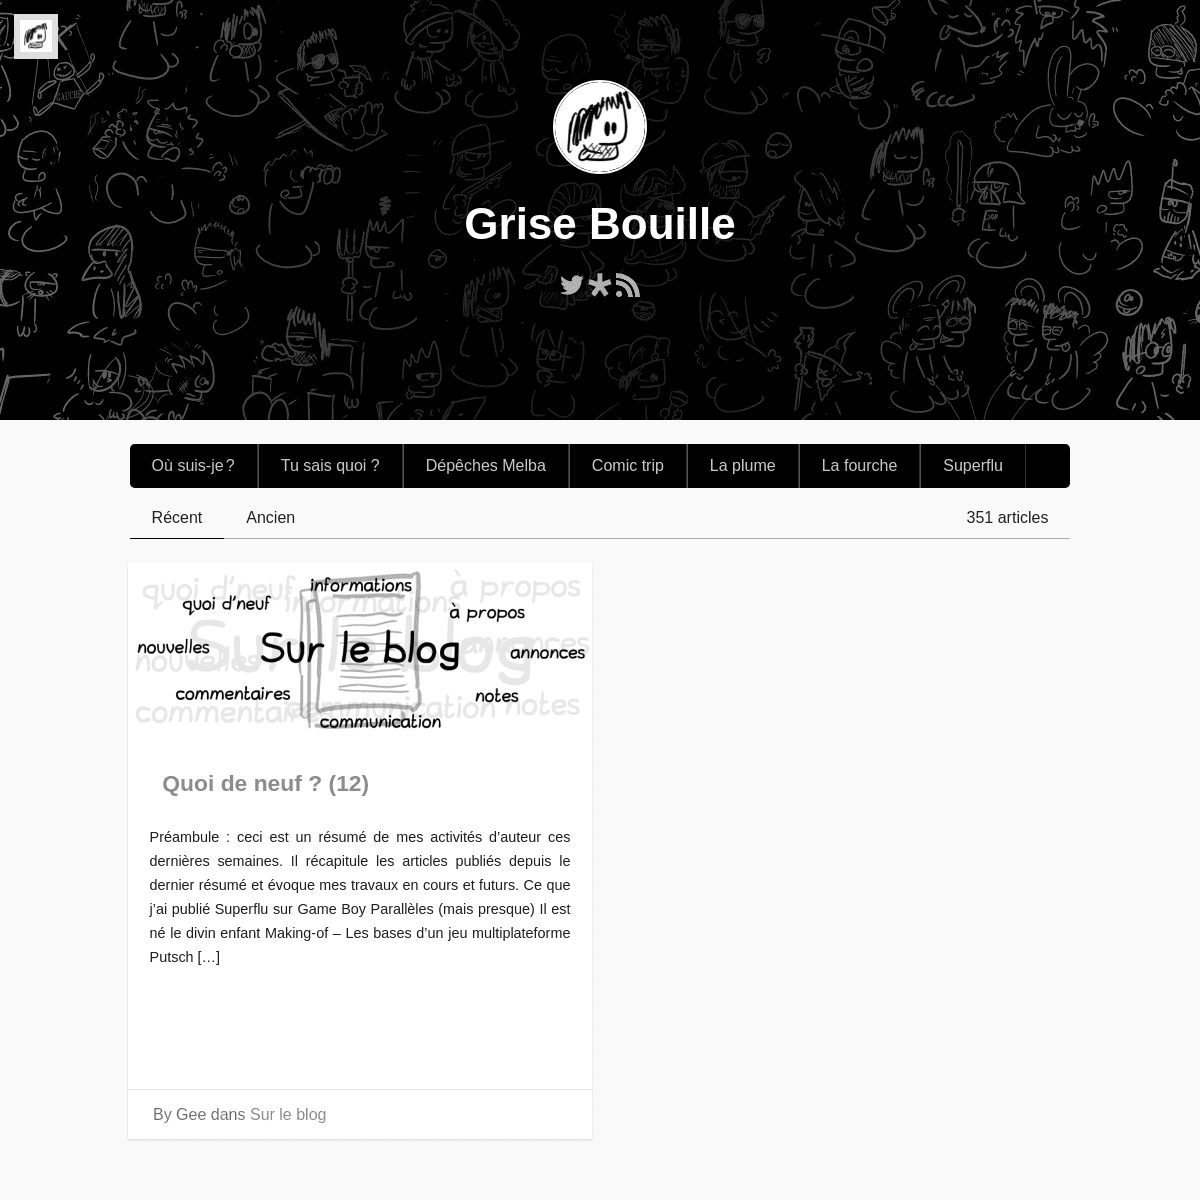 A complete backup of https://grisebouille.net